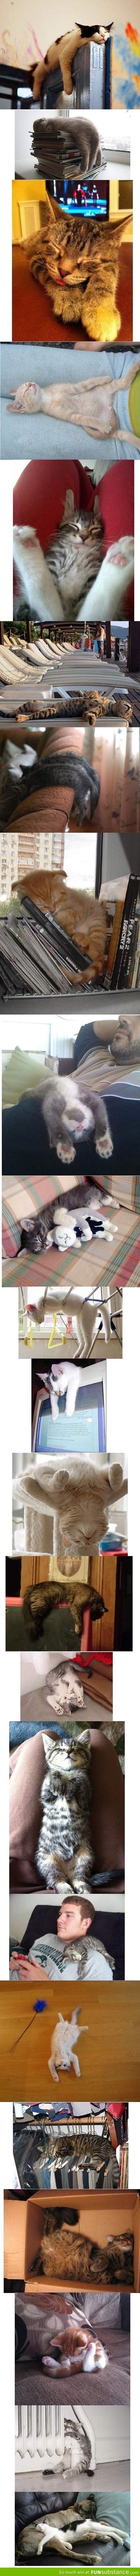 Cats sleep anywhere